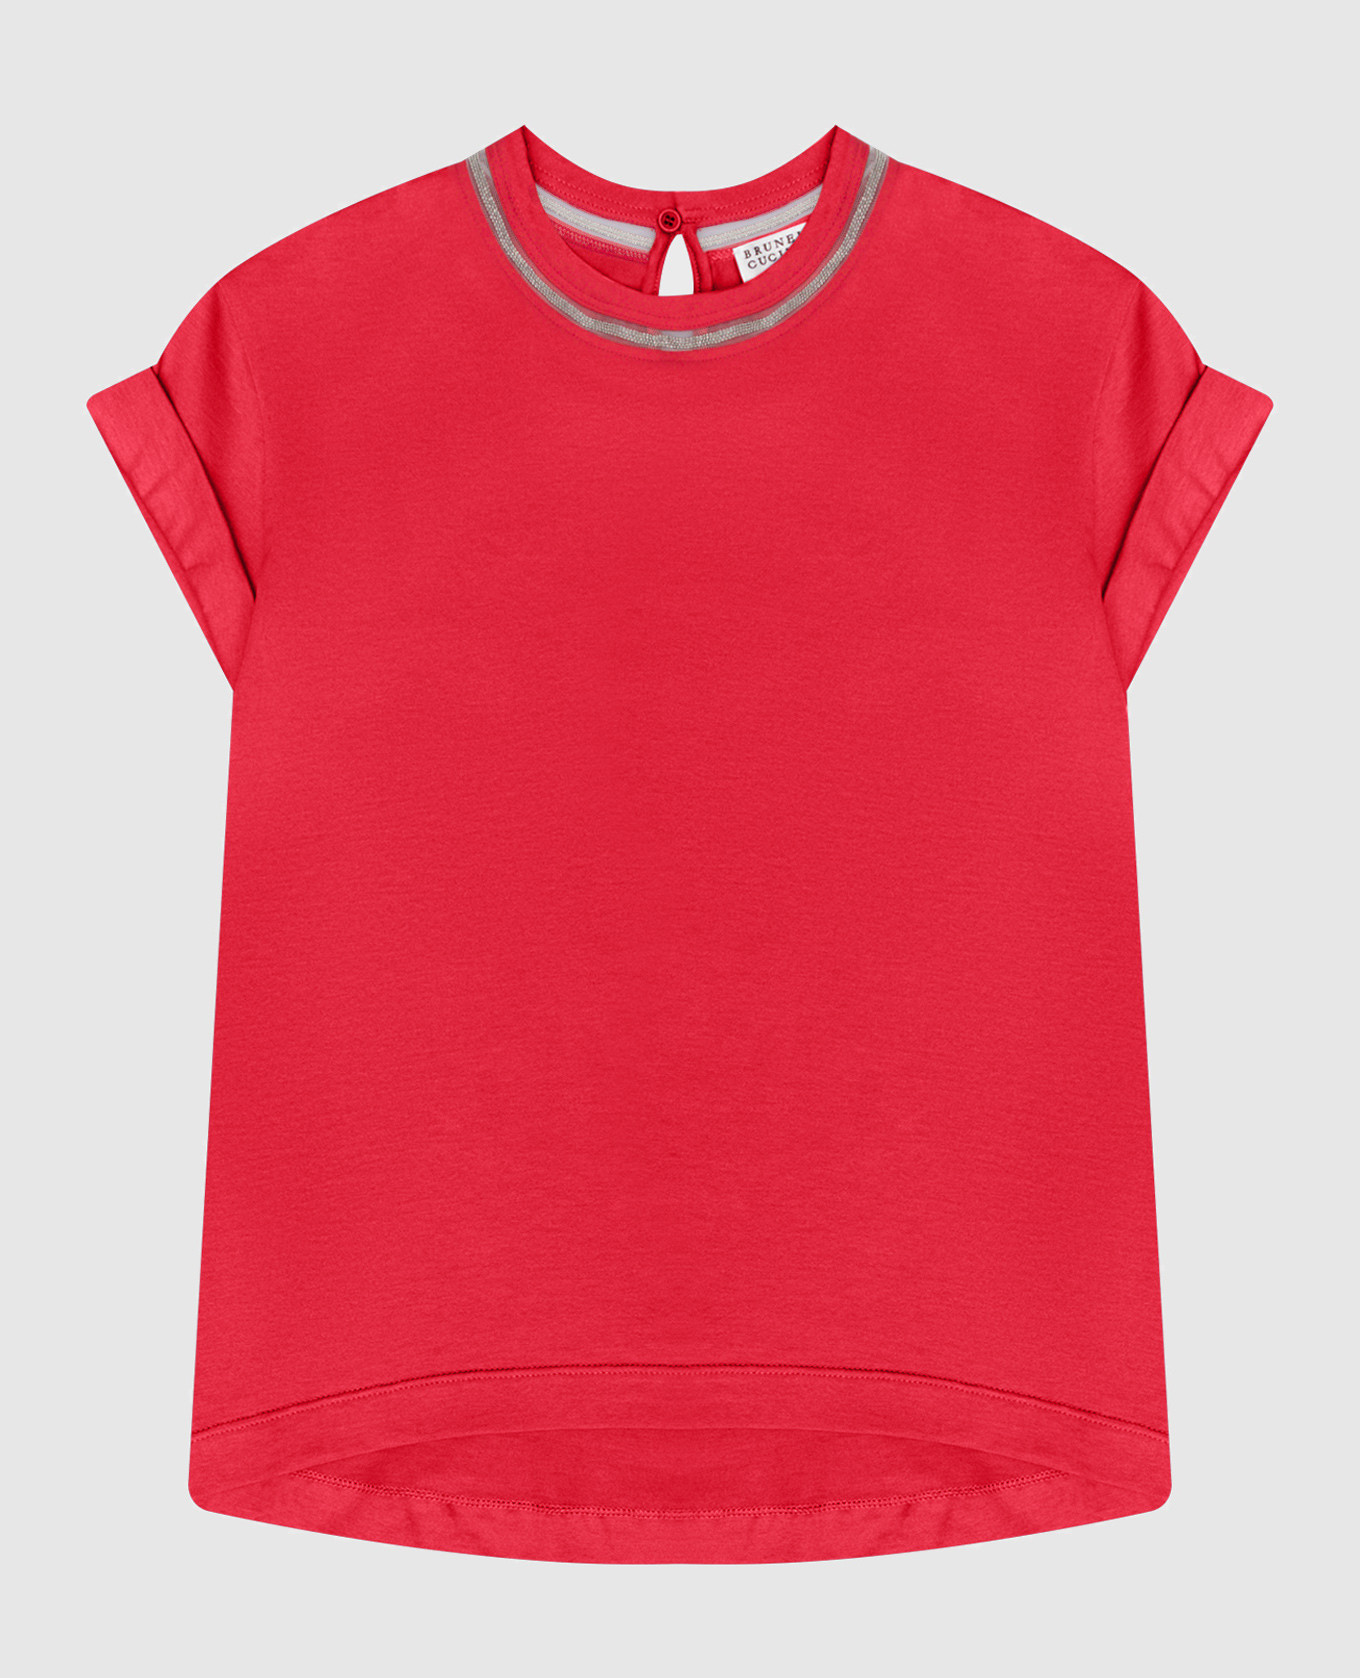 Children's red t-shirt with monil chain